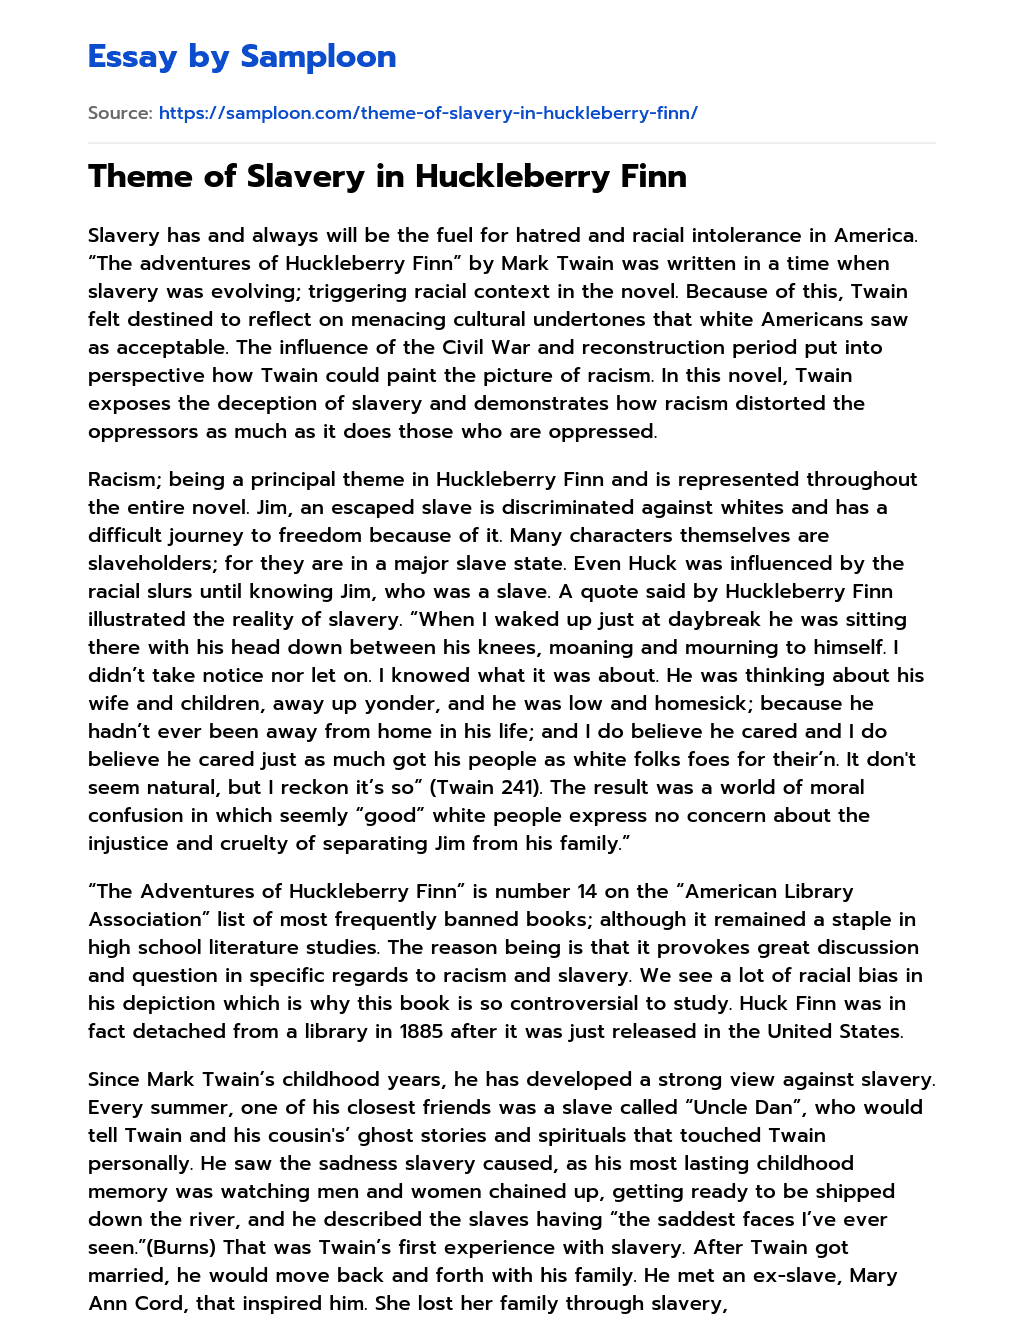 Theme of Slavery in Huckleberry Finn essay